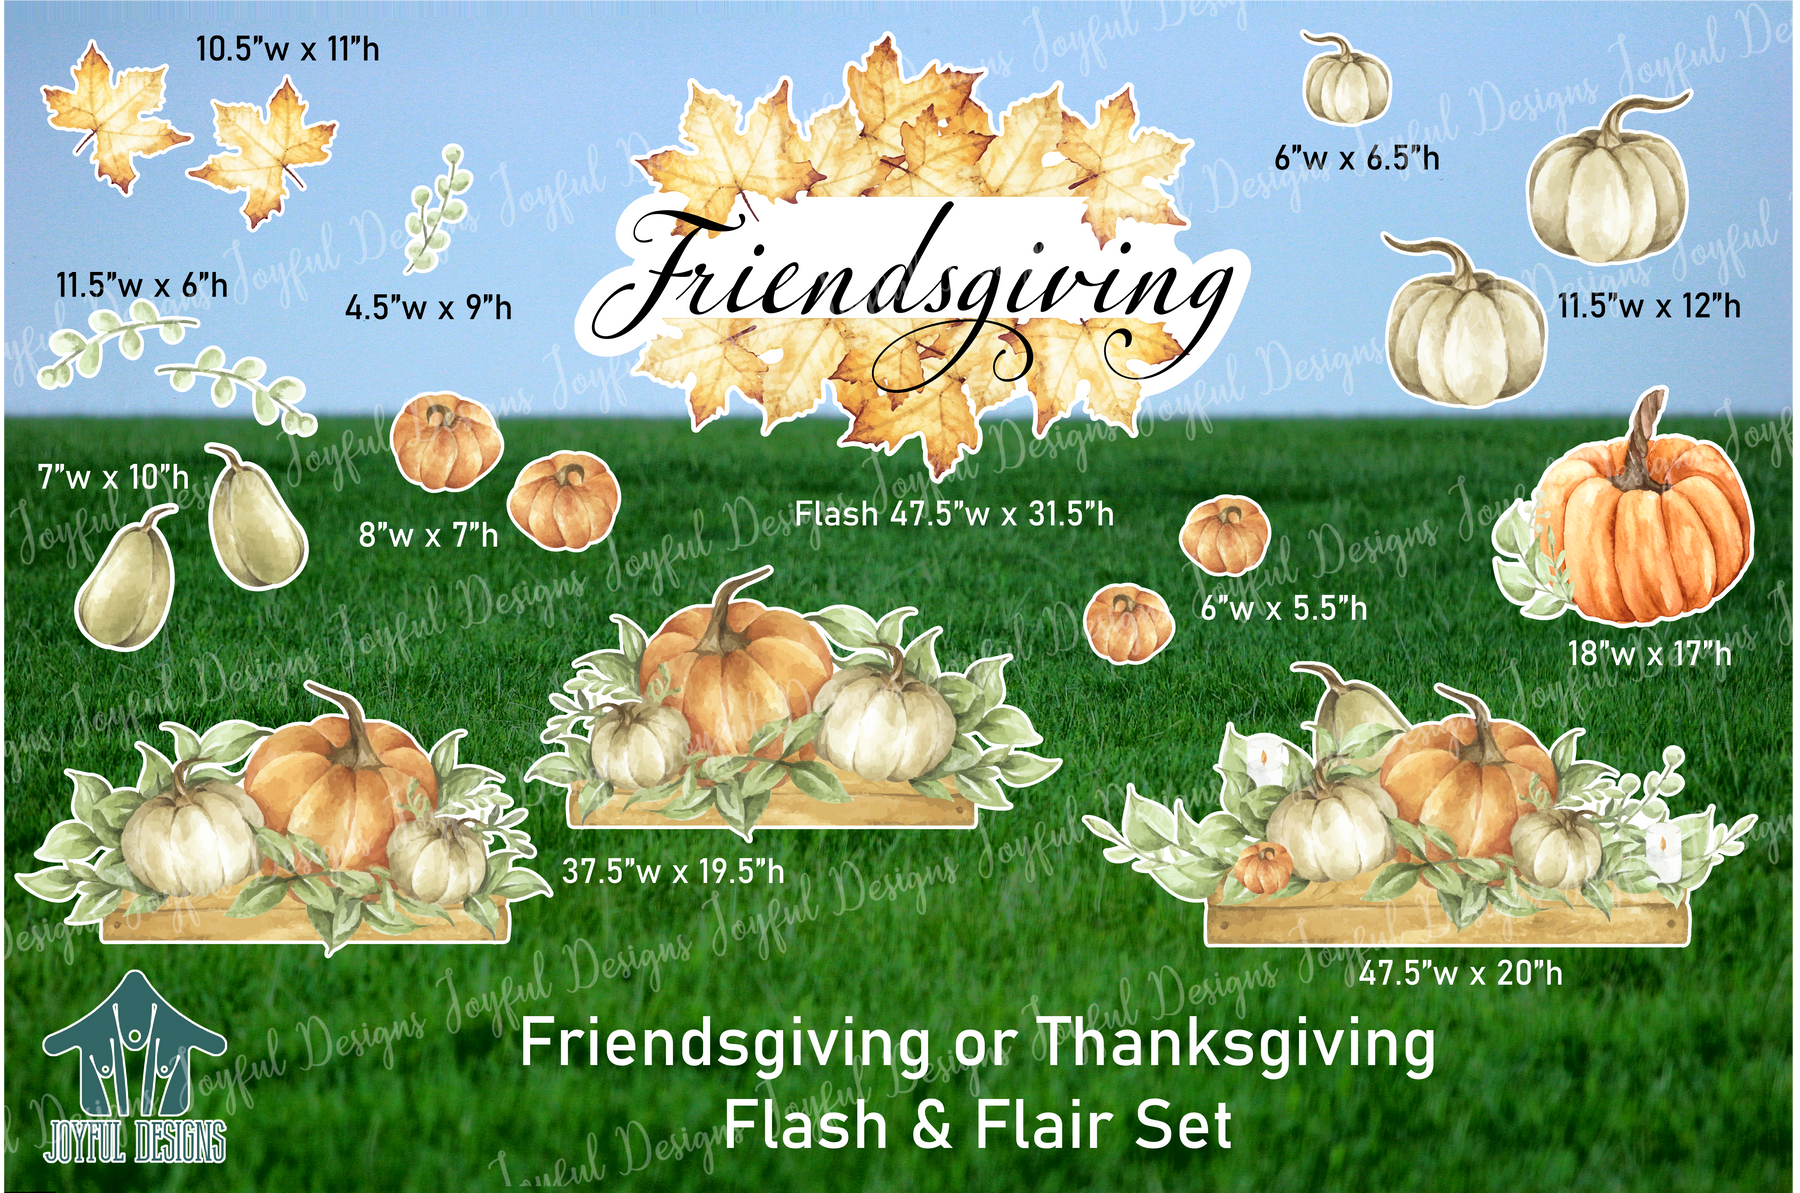 Friendsgiving or Thanksgiving Centerpiece & Flair Set